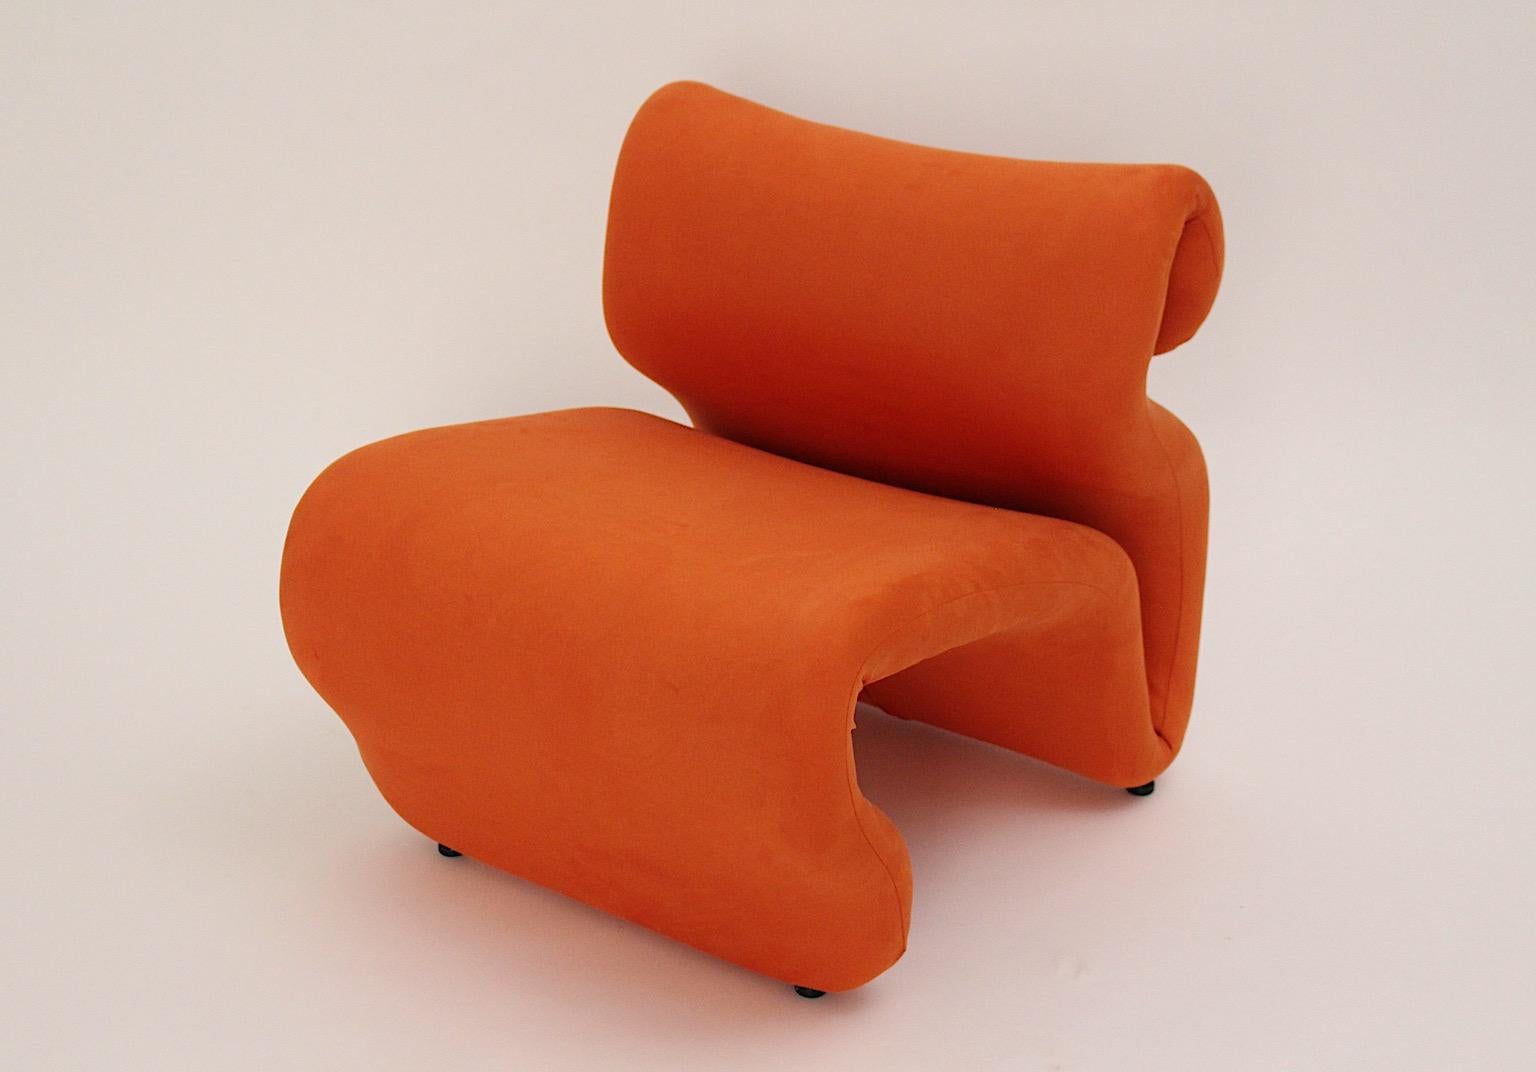 Fabric Space Age Vintage Sculptural Orange Etcetera Chair by Jan Ekselius 1970s Sweden